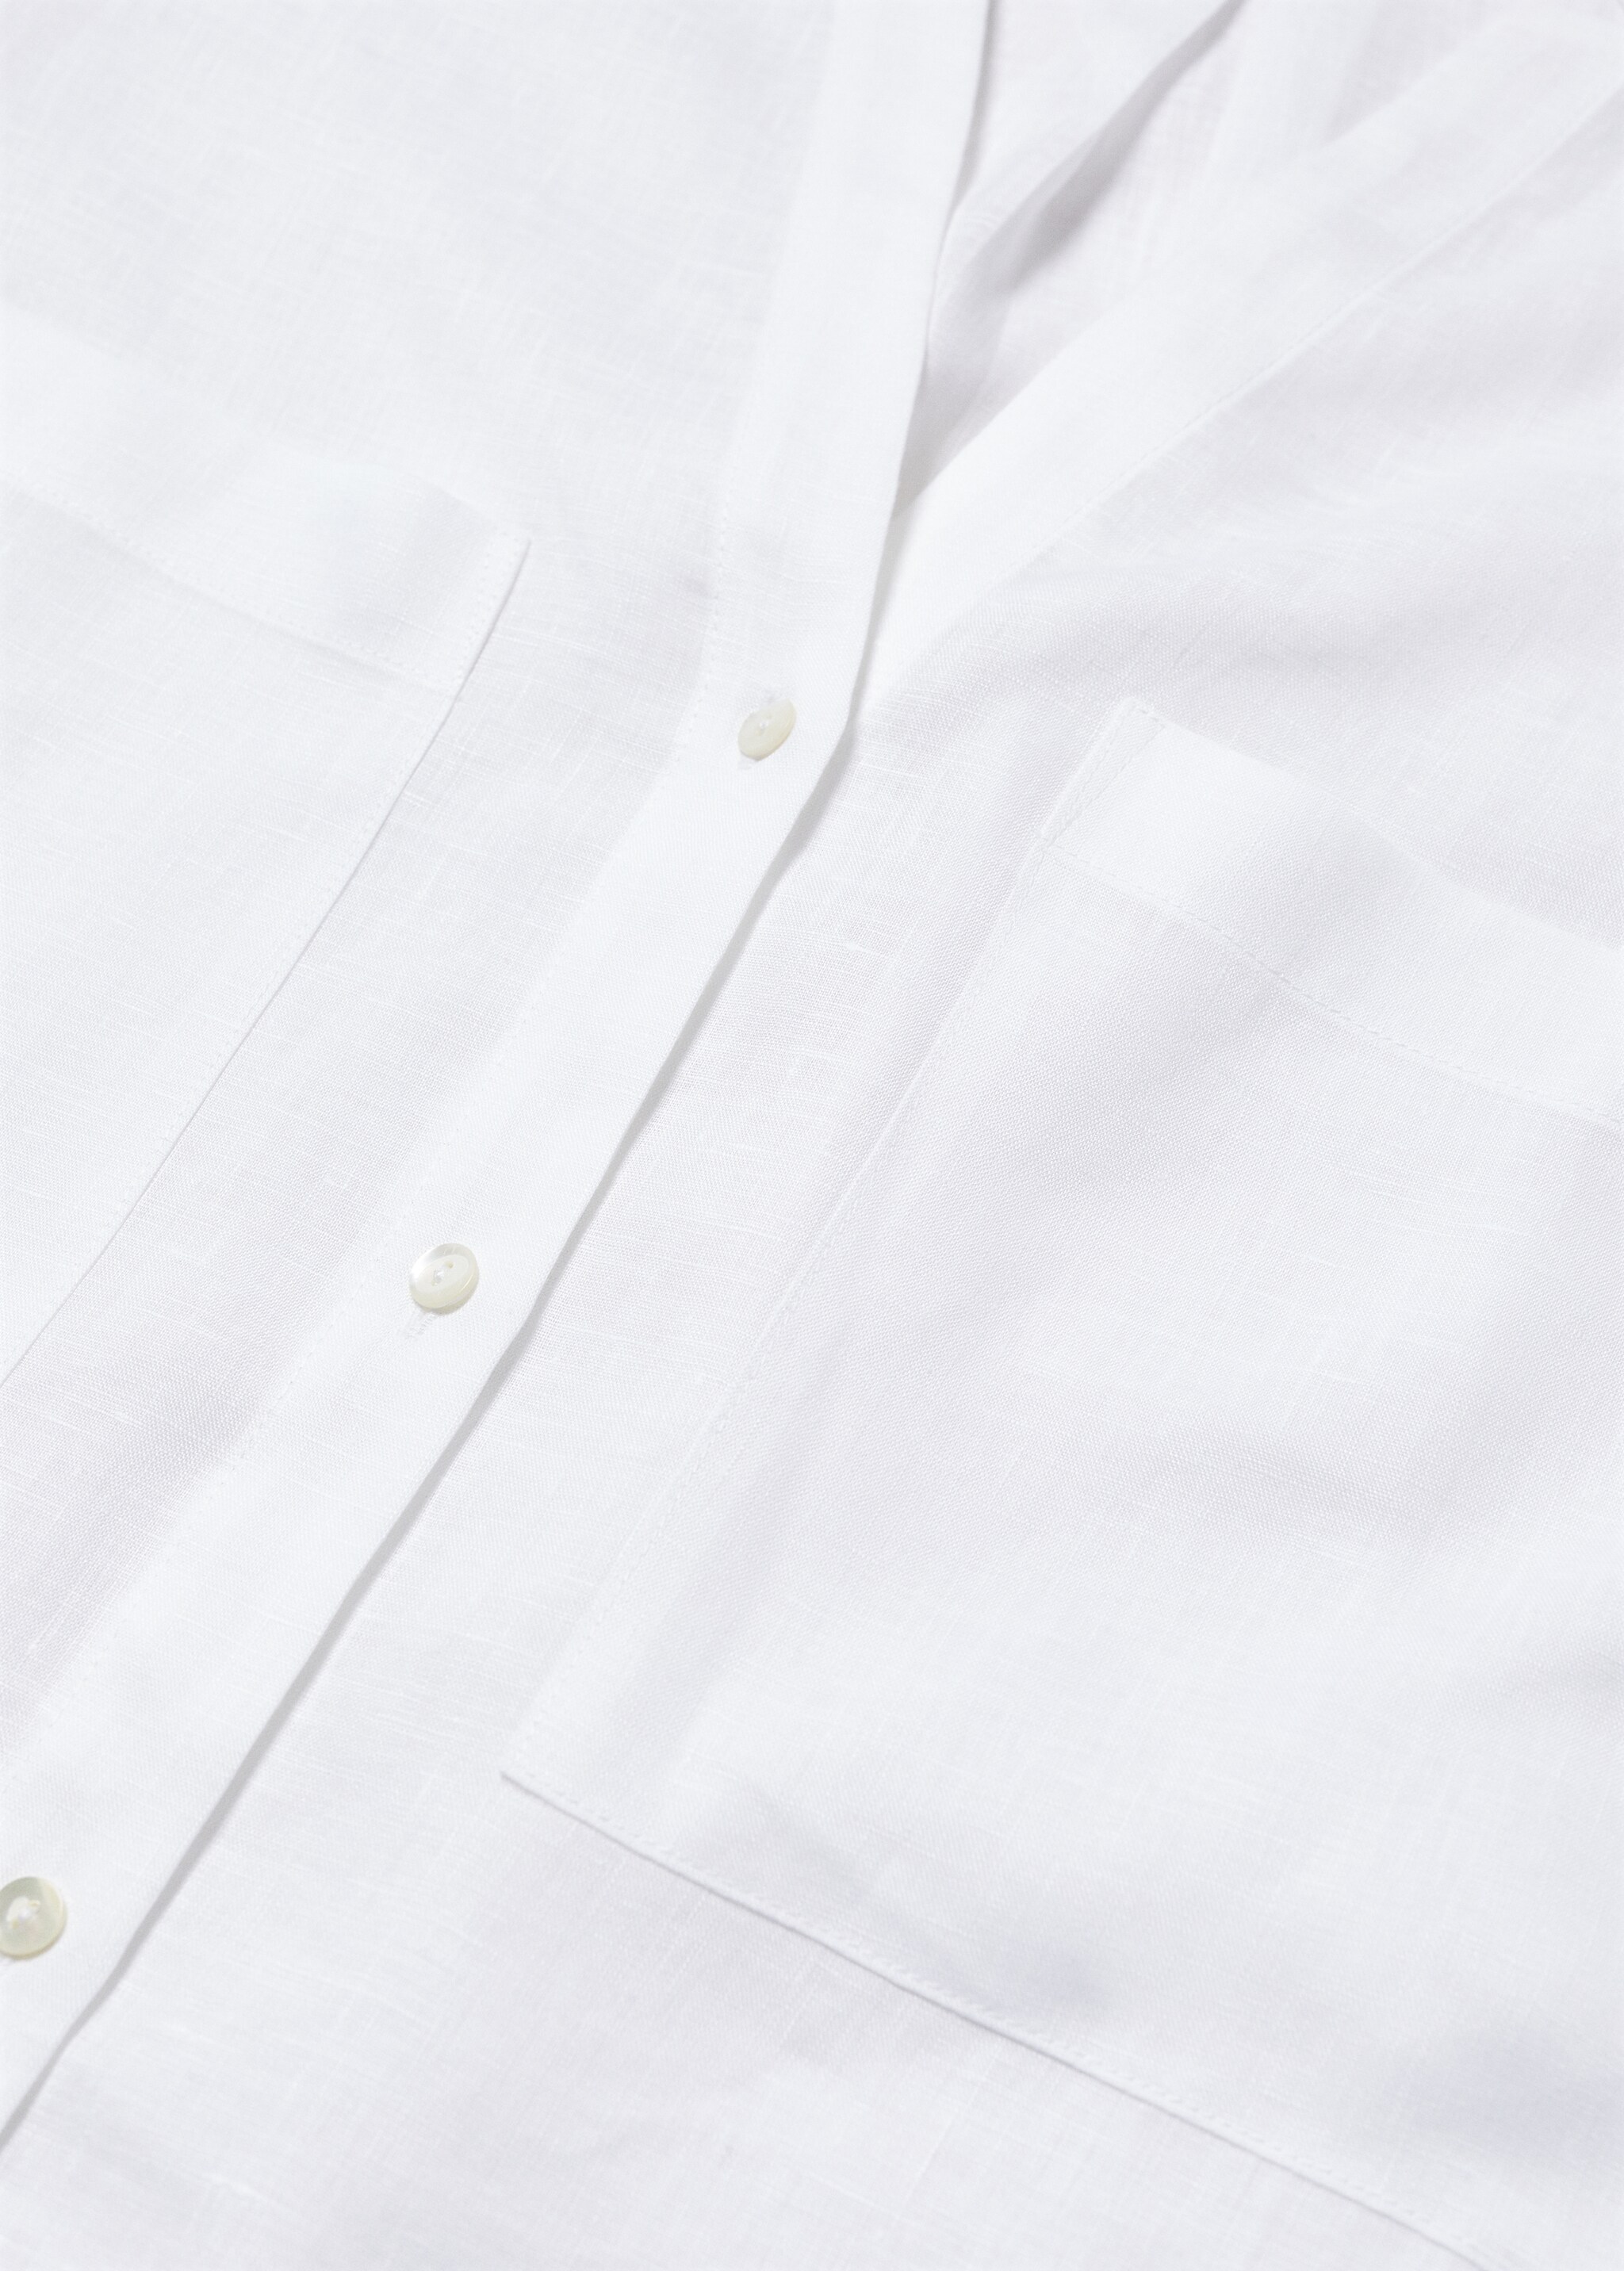 Pocket linen shirt - Details of the article 8